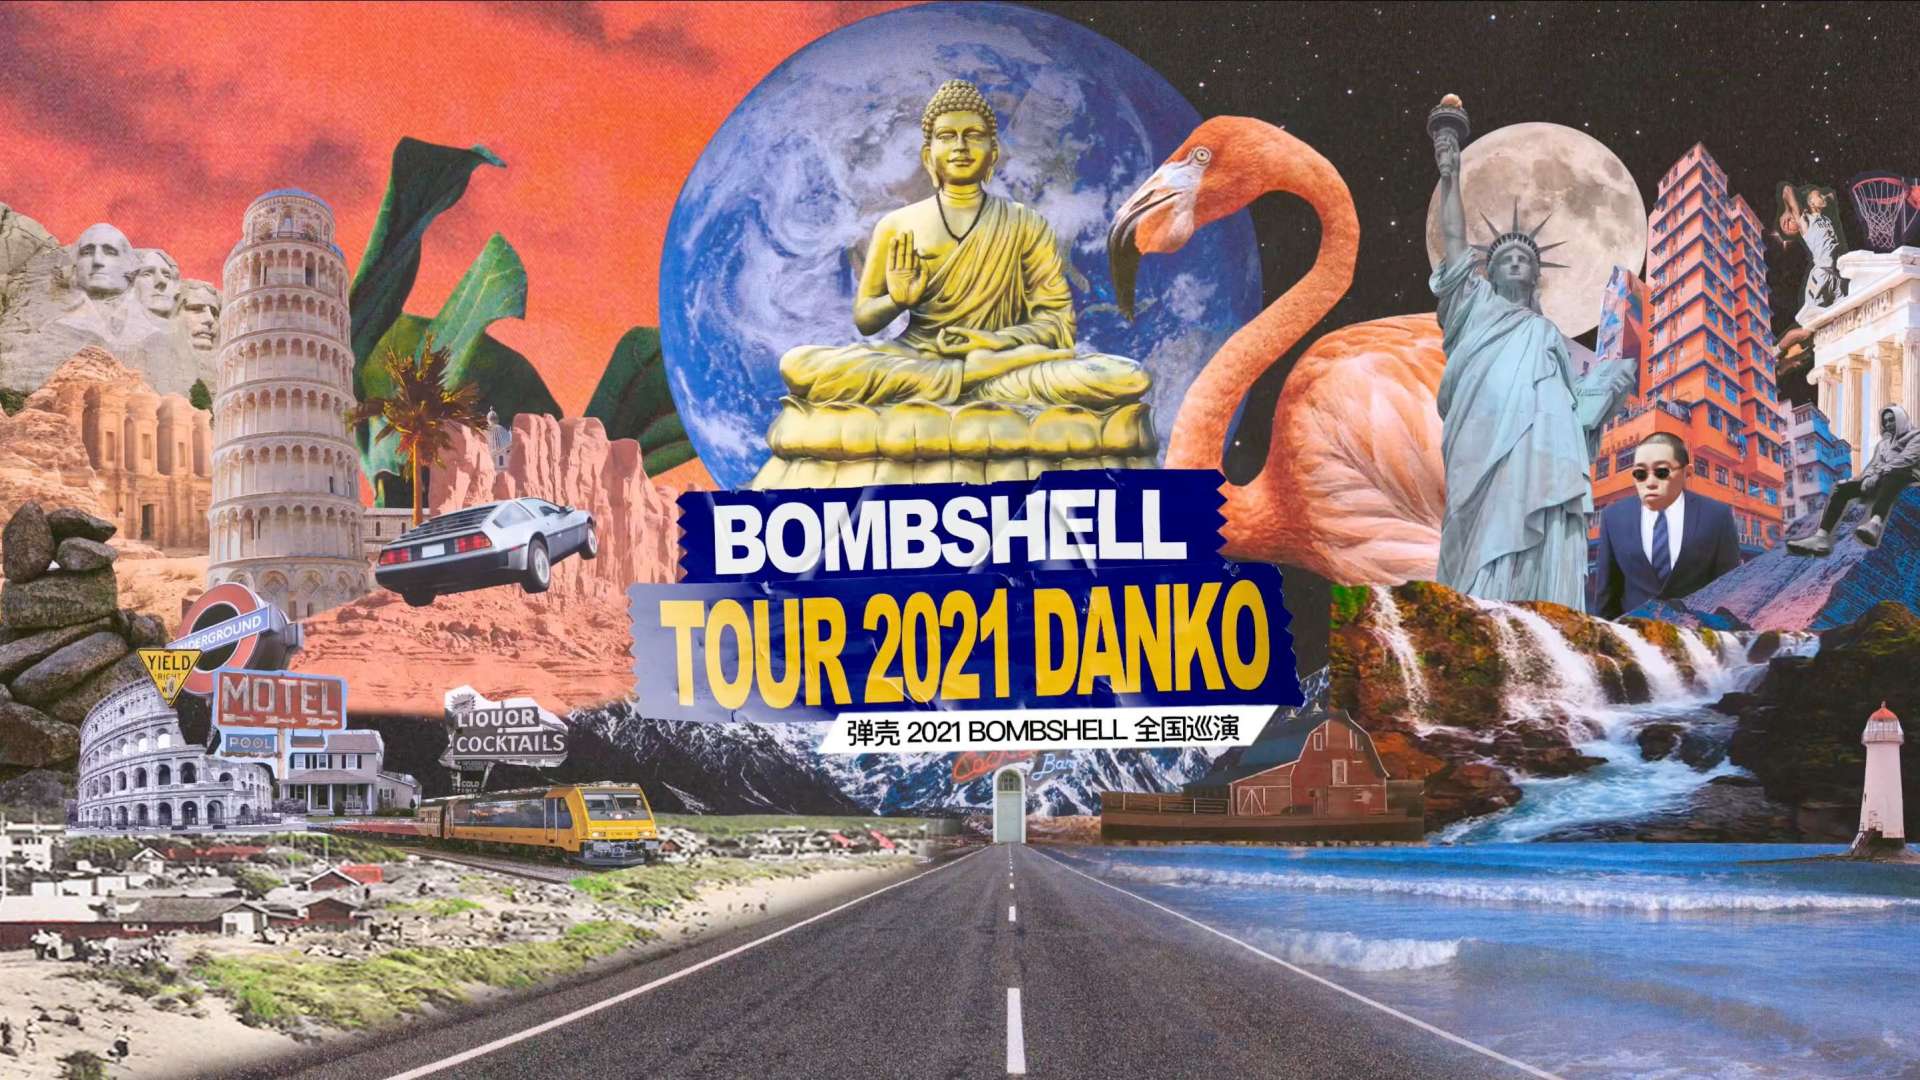 BOMBSHELL TOUR 2021 DANKO